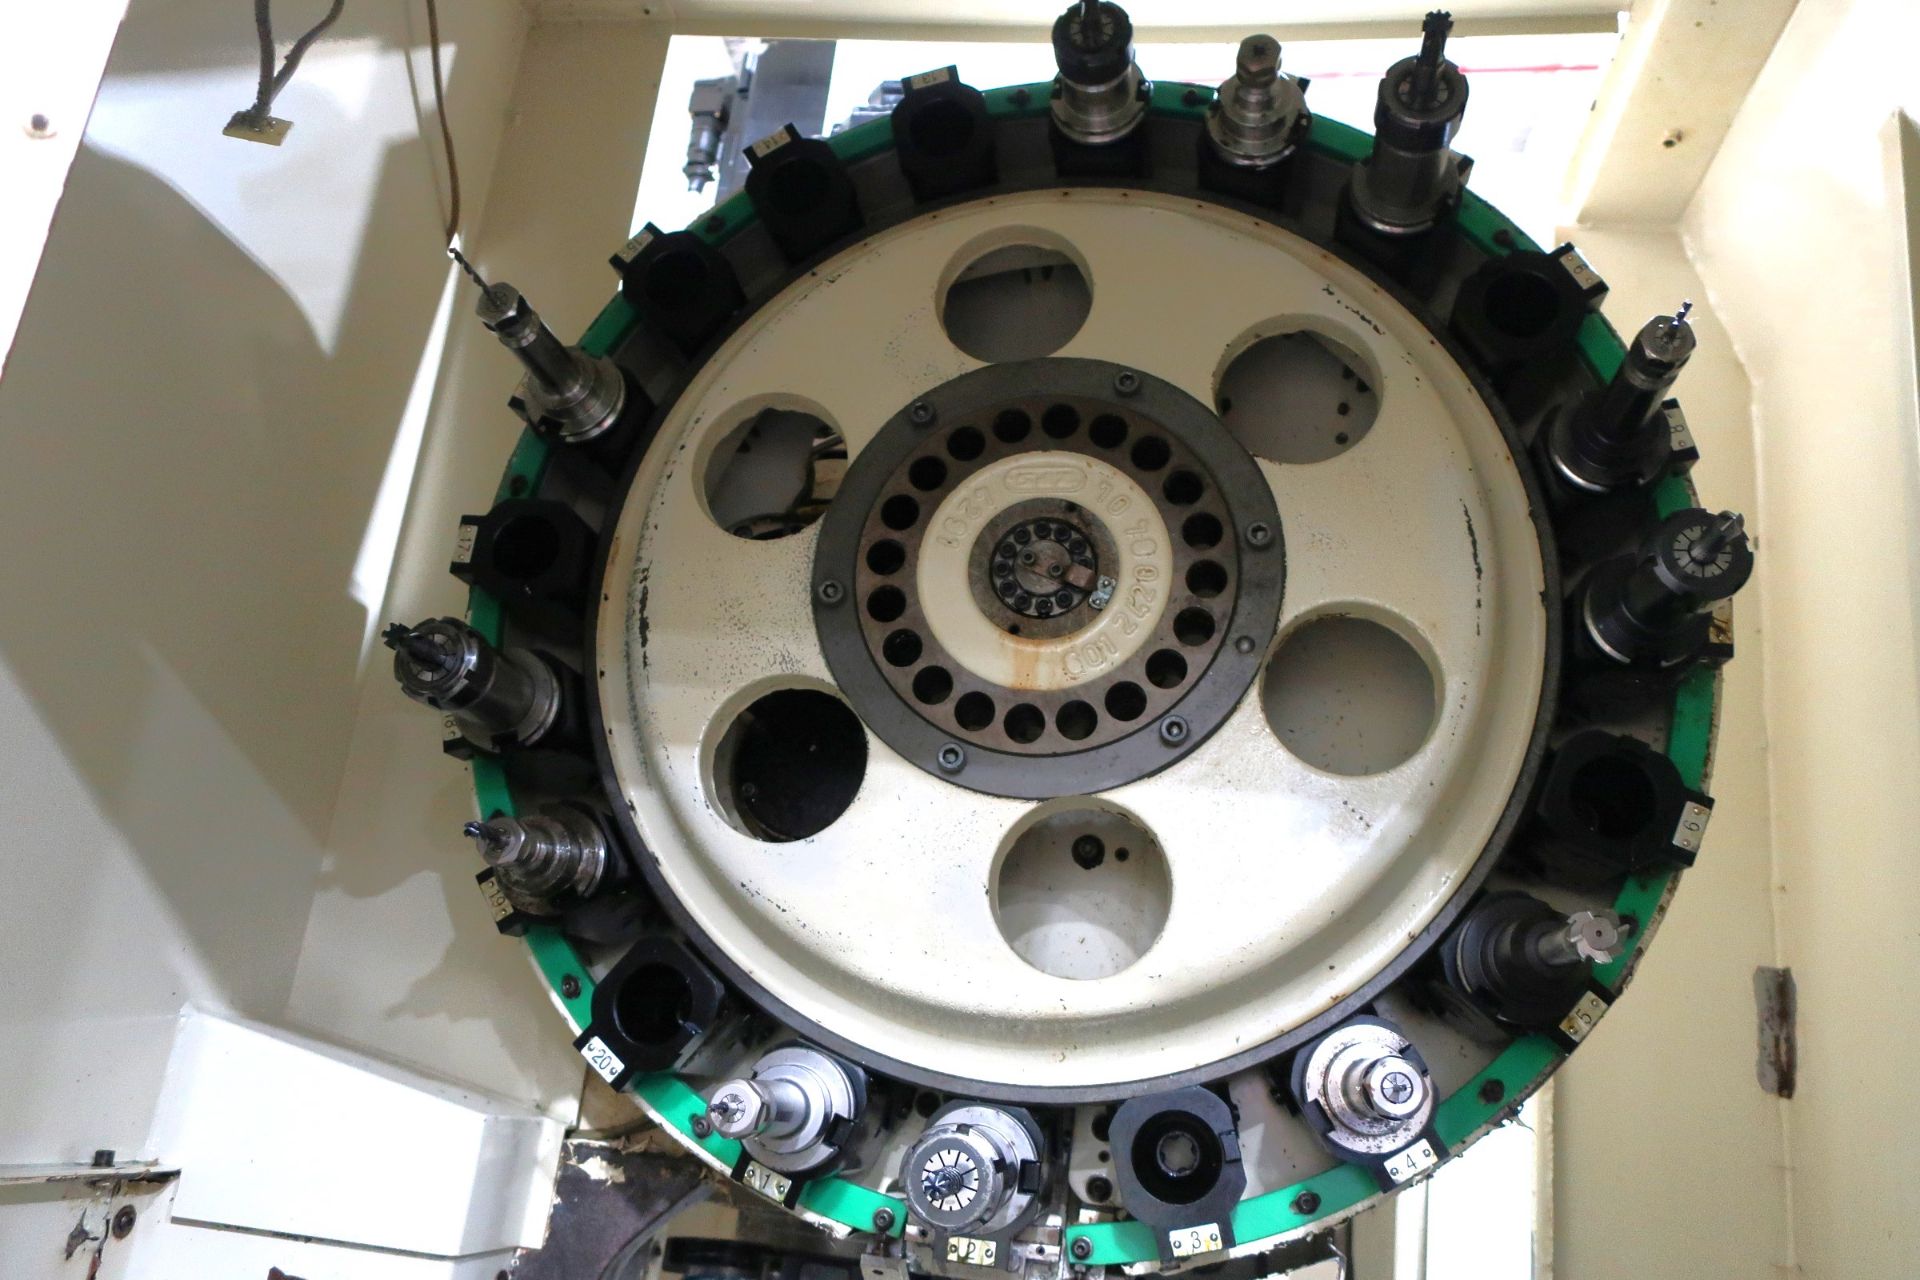 Okuma MC-V3016 5-Axis CNC Vertical Machining Center, S/N 0038, New 2003 - Image 13 of 19